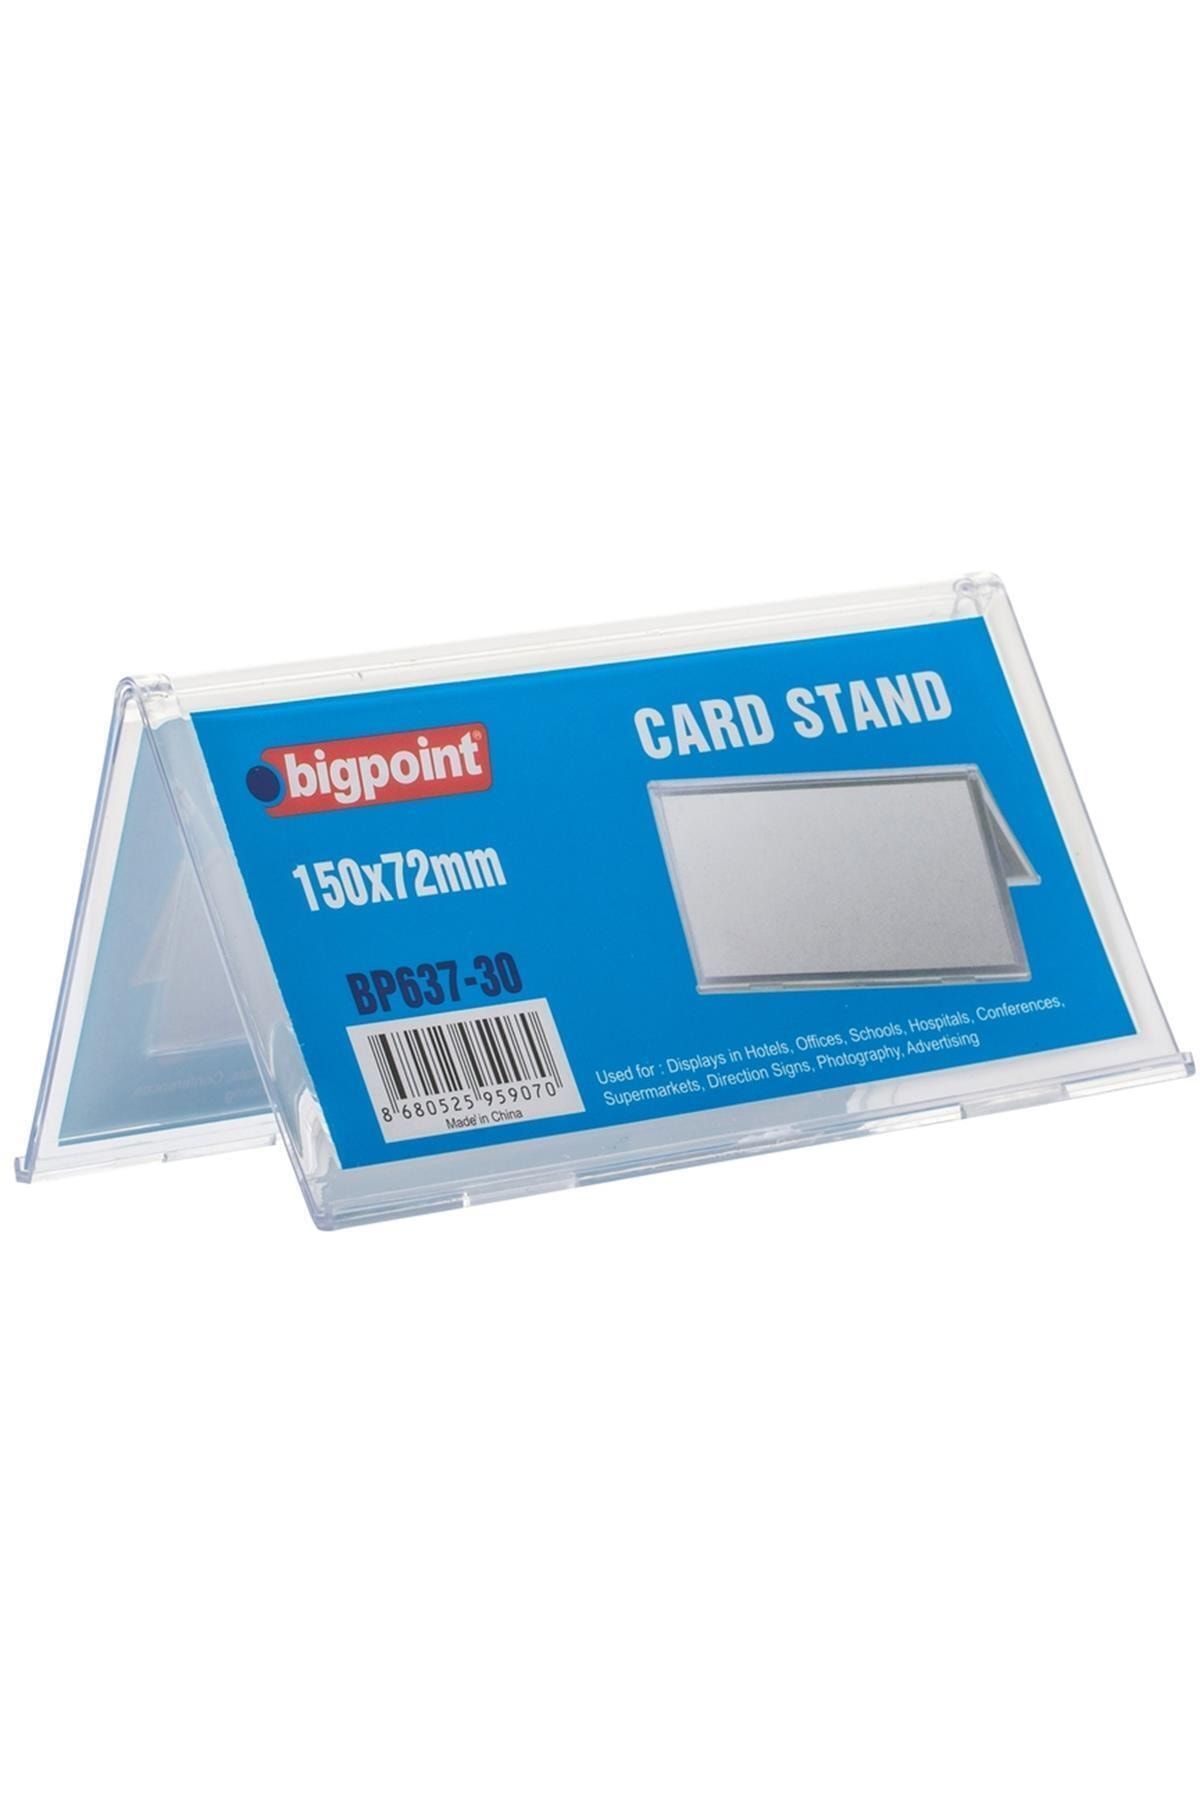 Bigpoint Beyaz Çift Taraflı Kart Standı 150x72mm